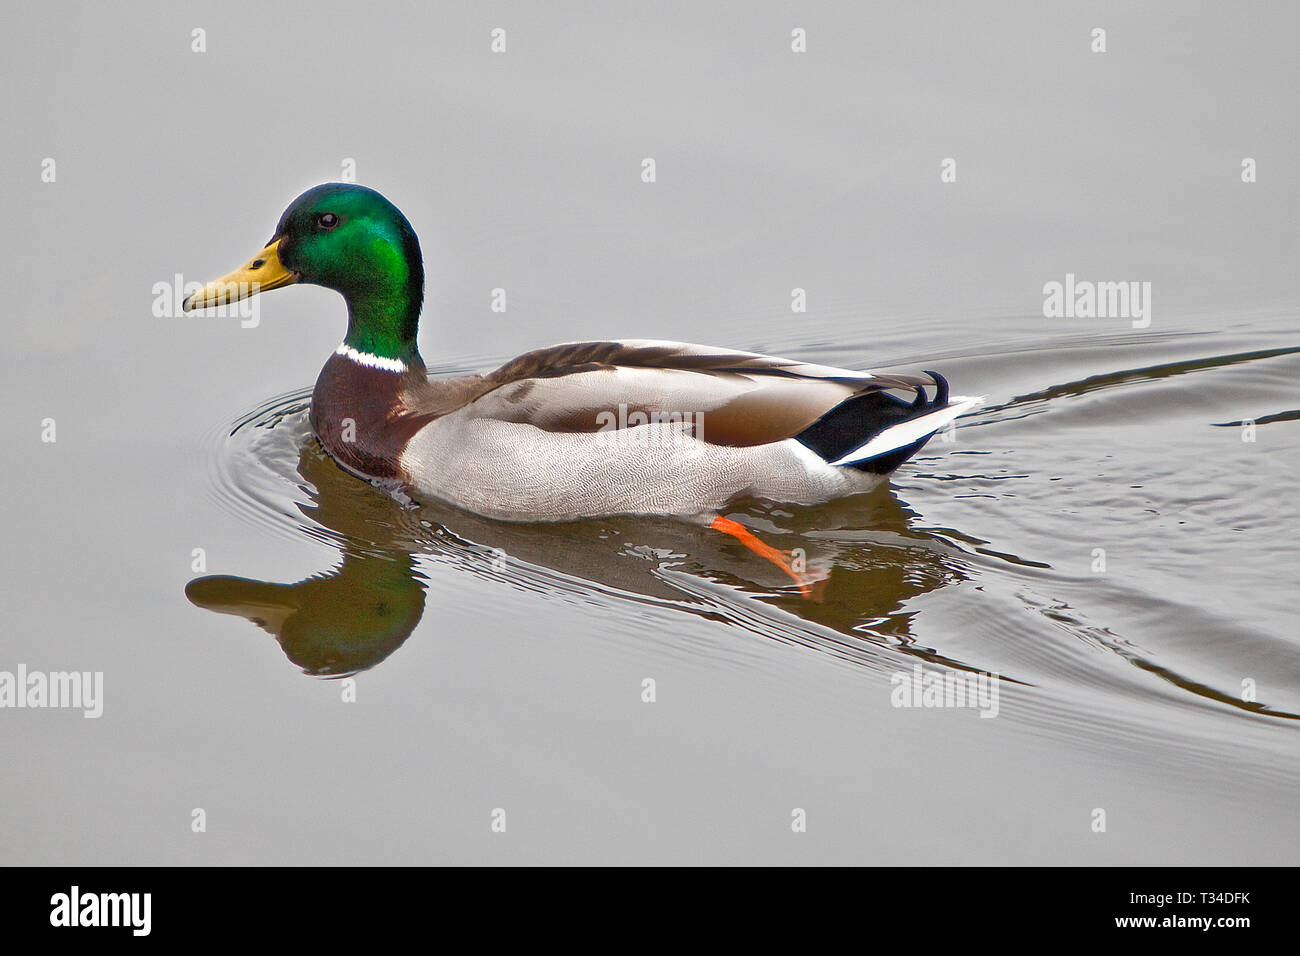 A mallard duck swims through very still water. Stock Photo